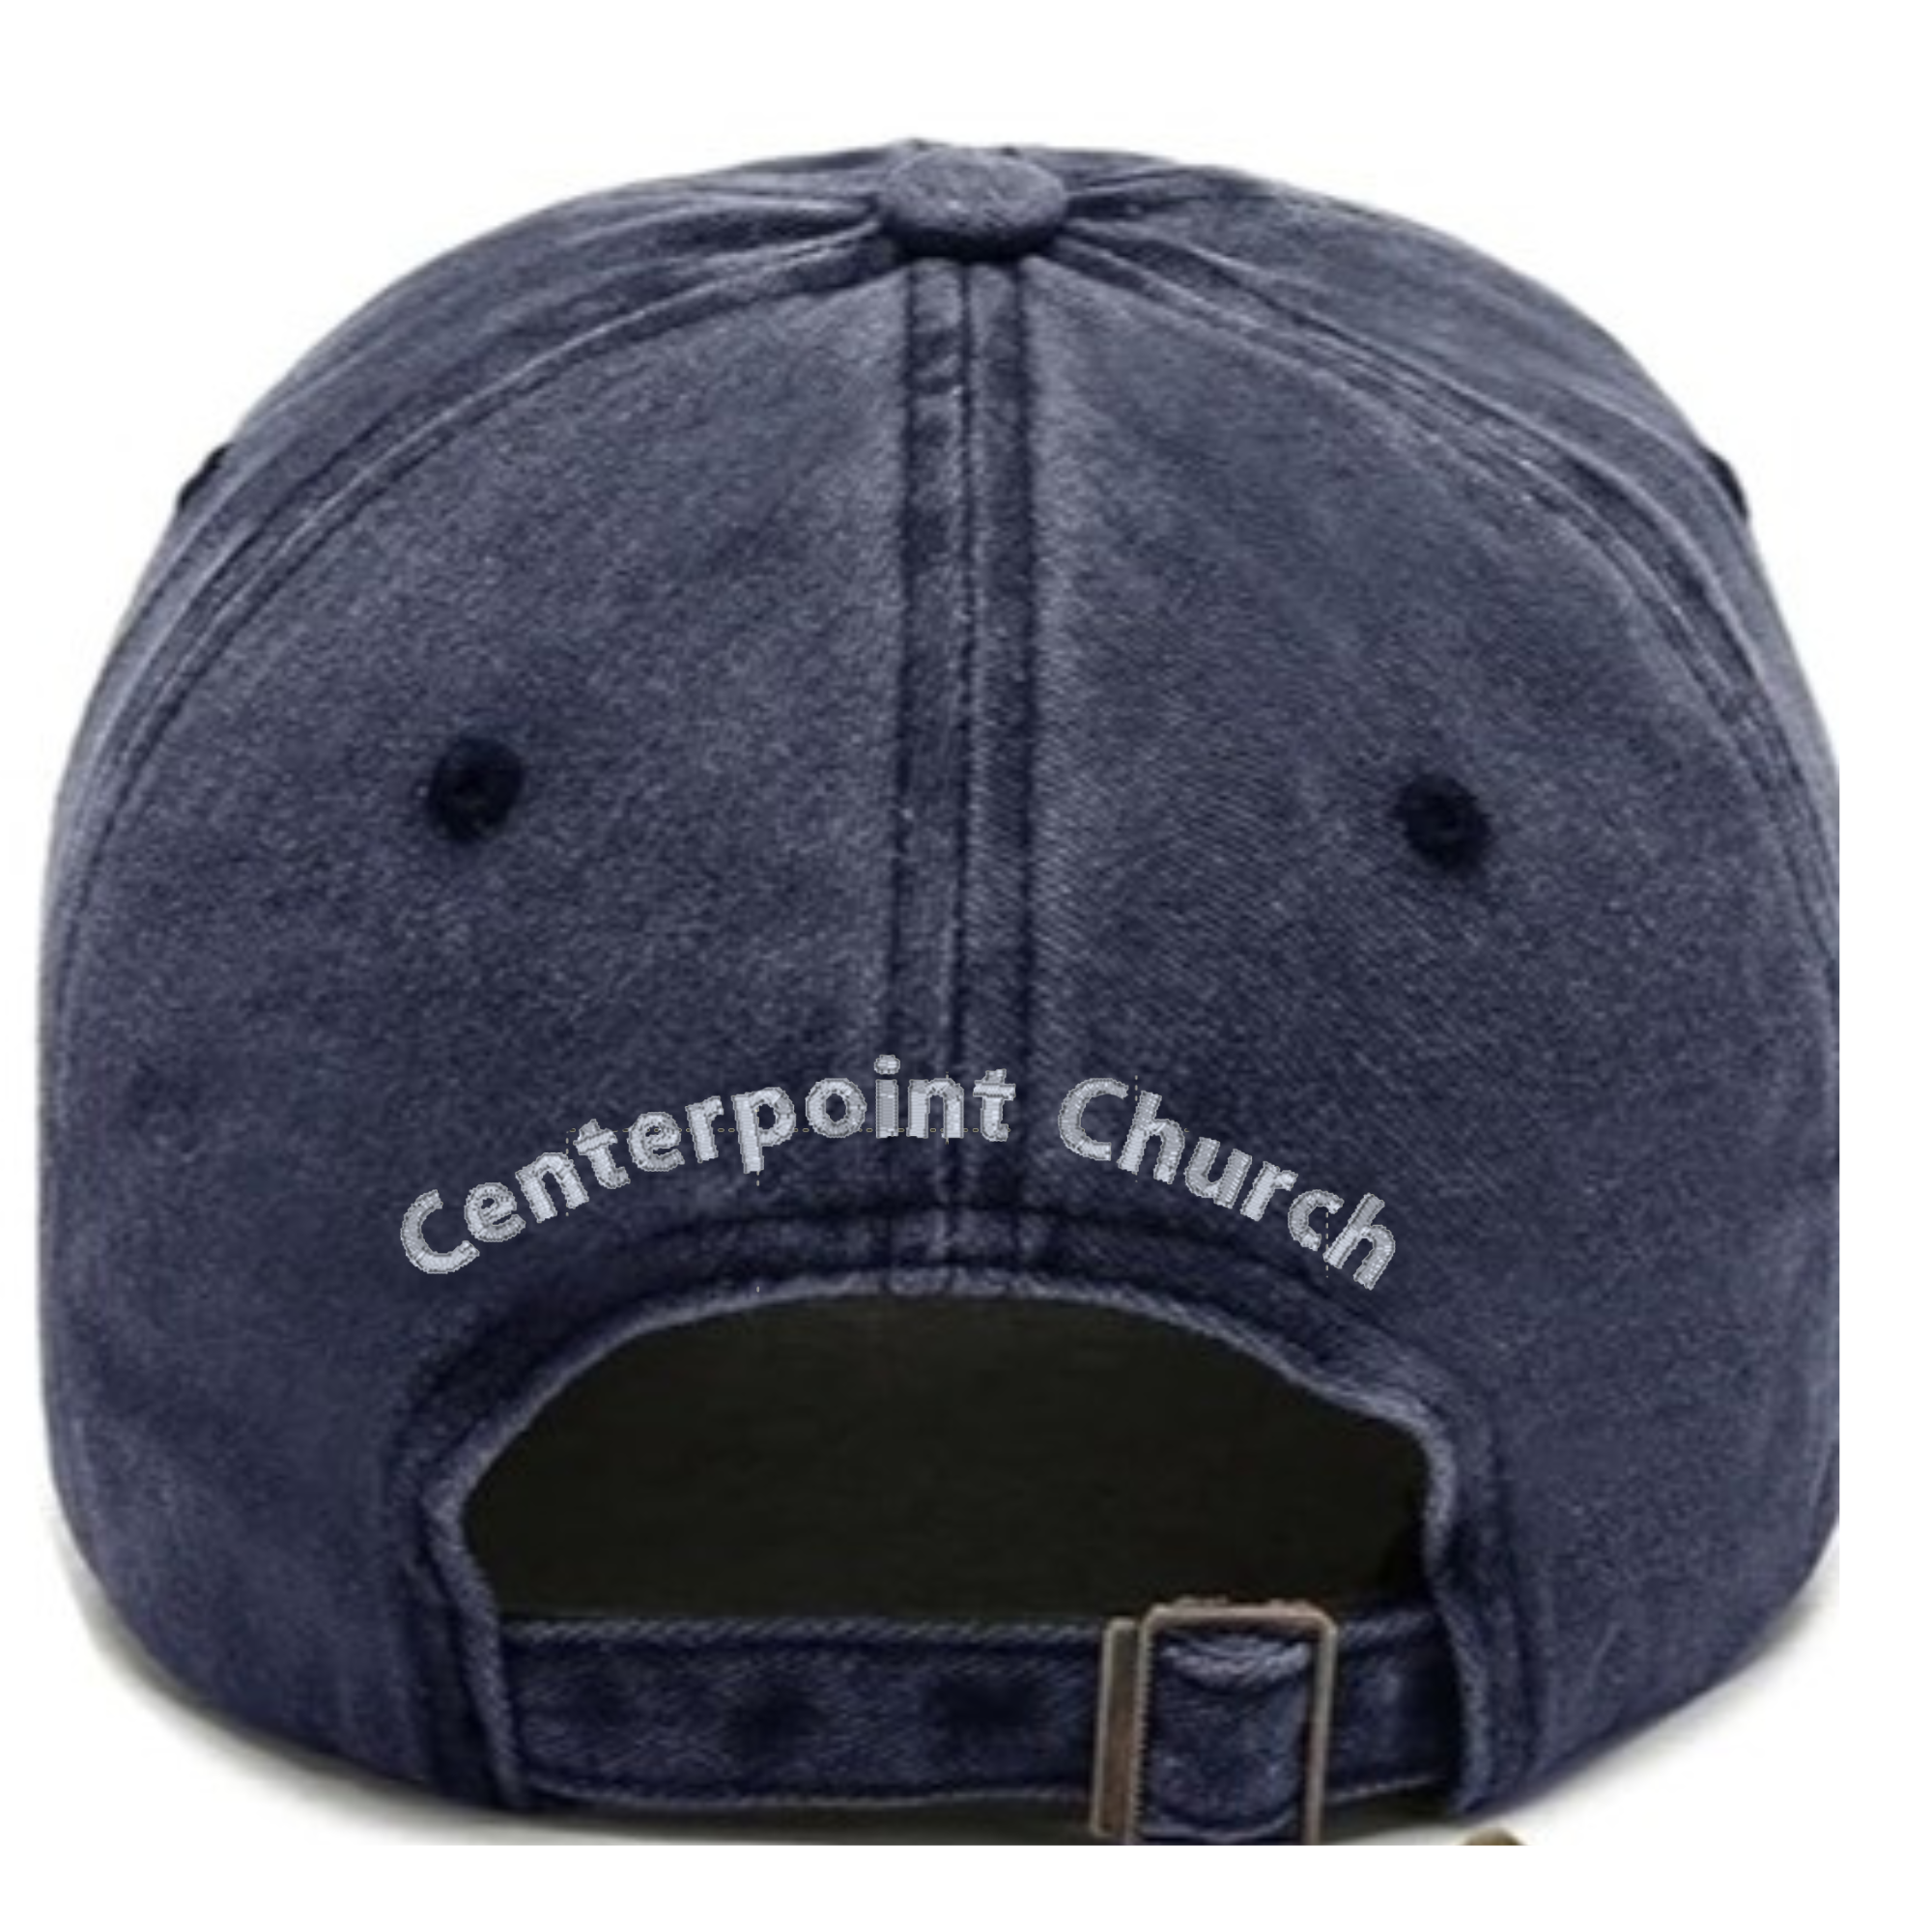 Centerpoint Church Cap